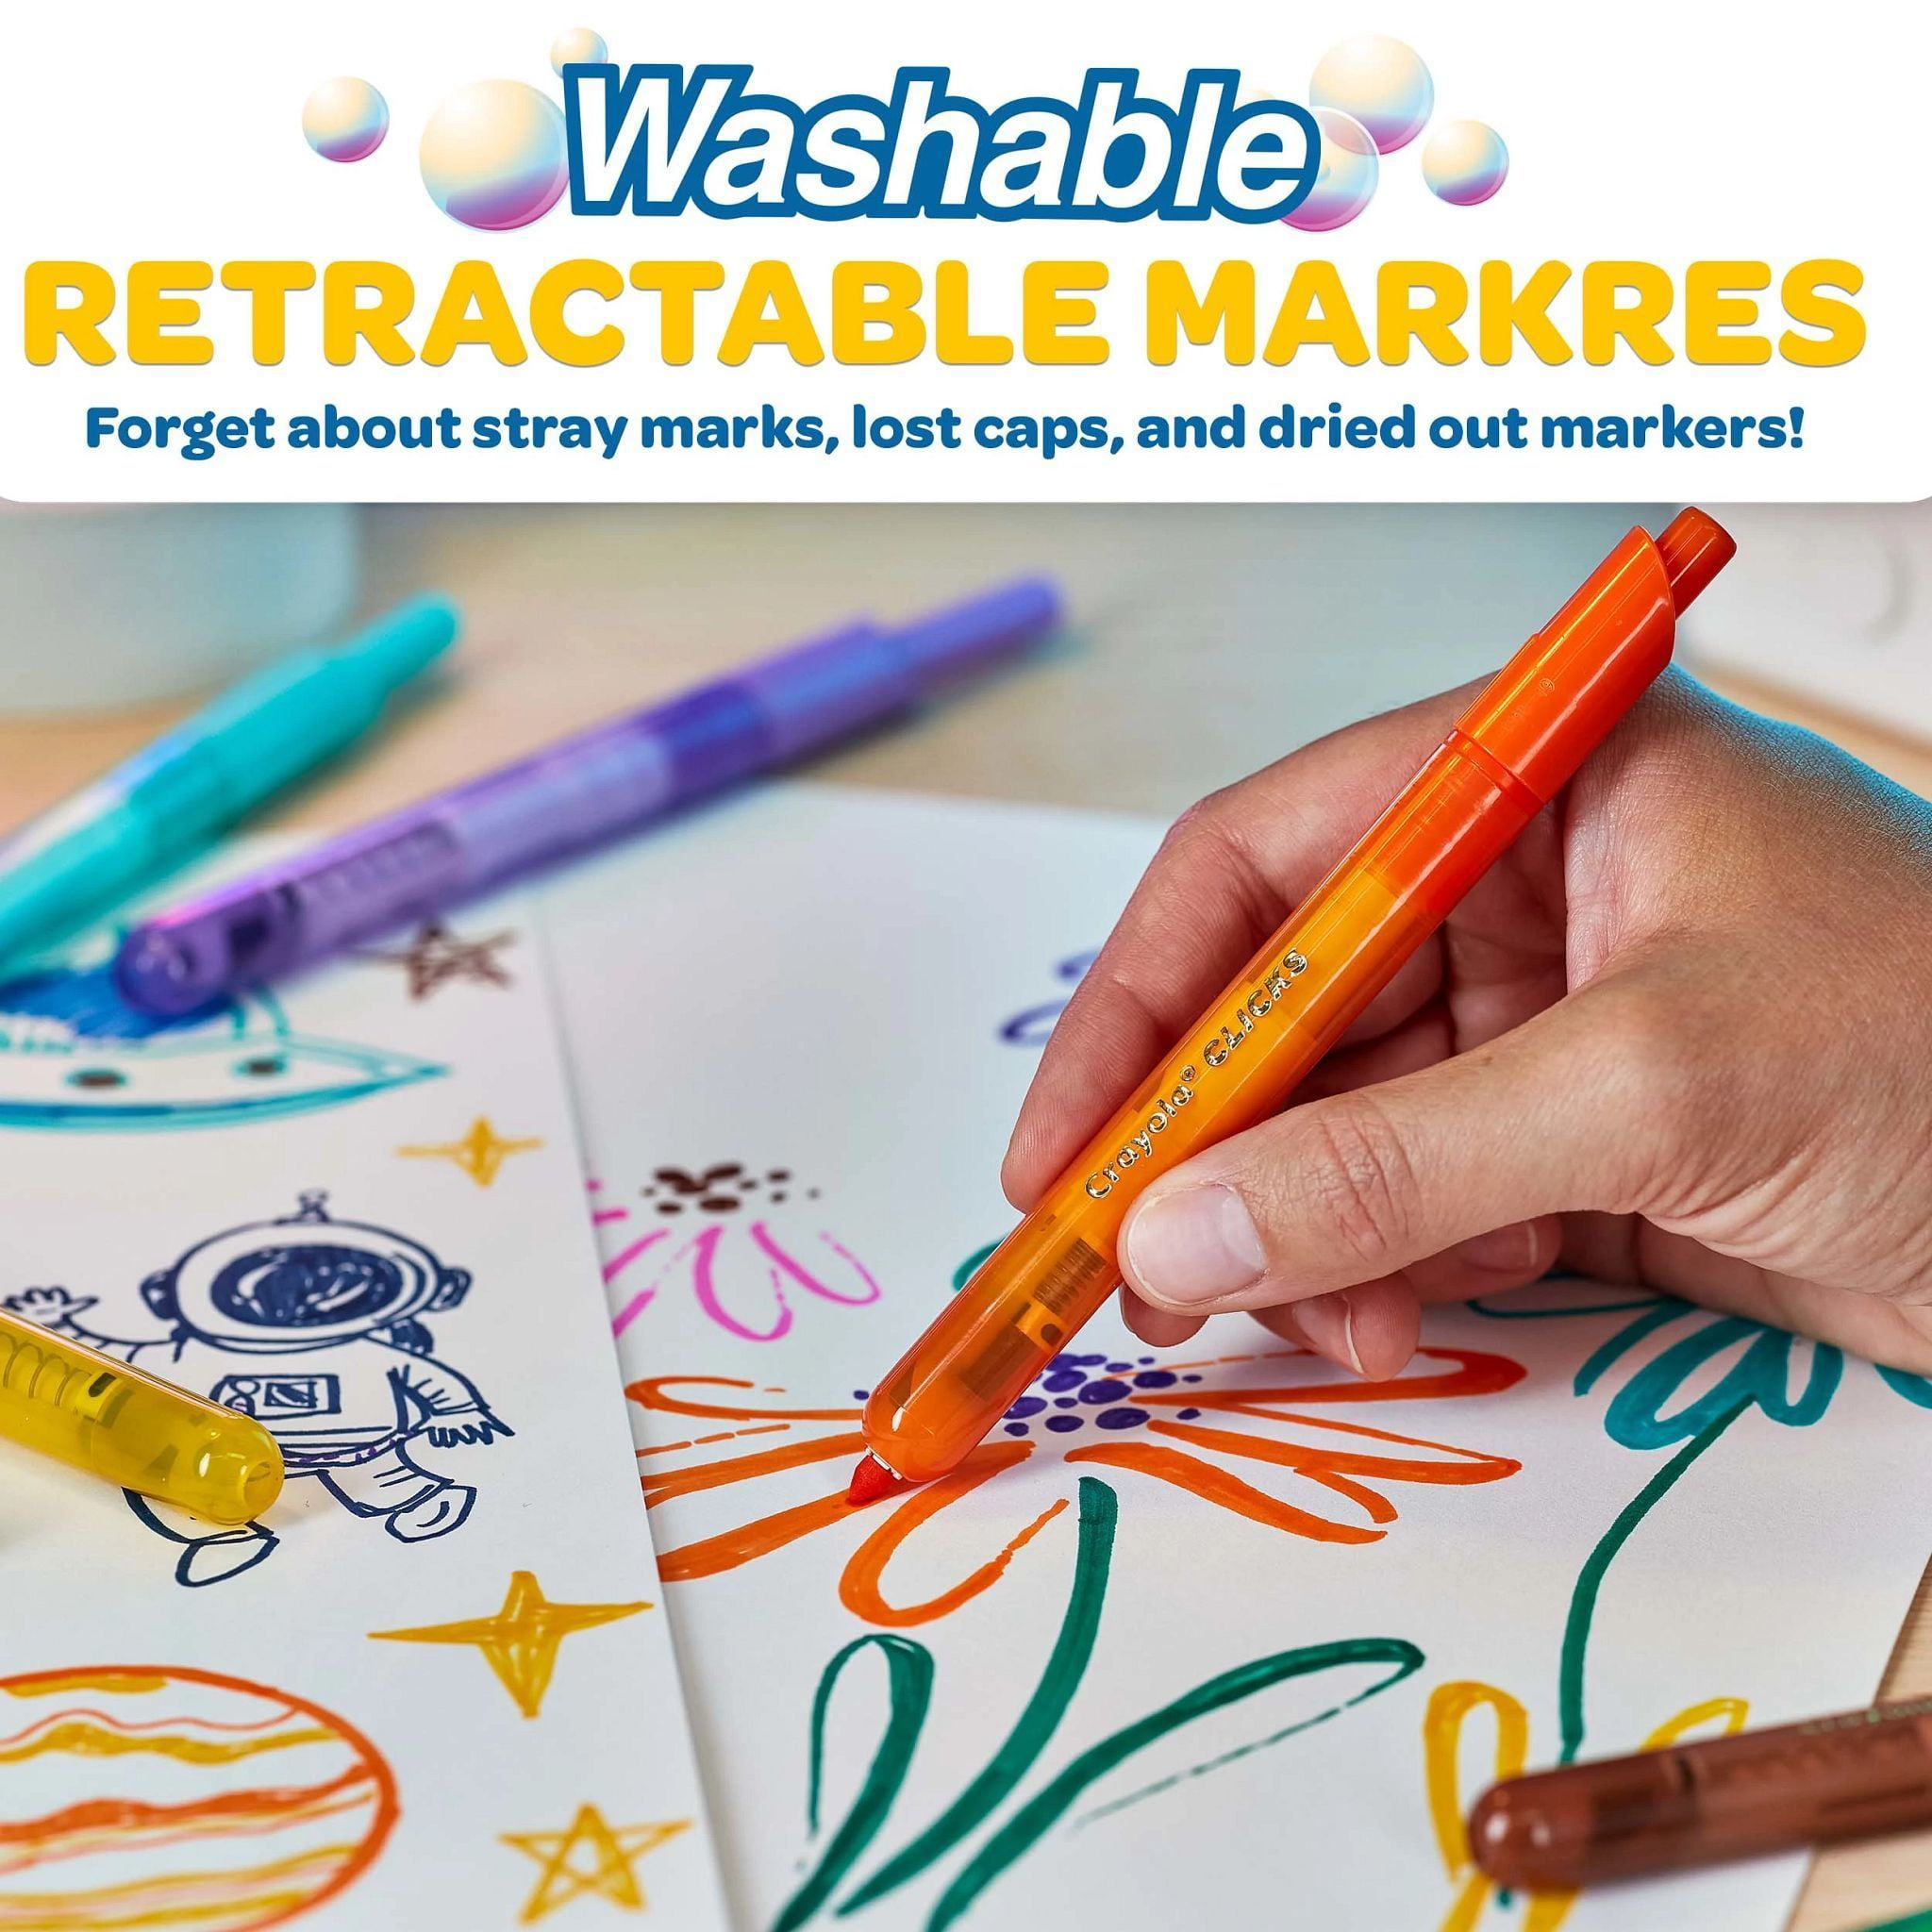 Crayola Clicks Retractable Markers, 10 per Pack, 2 Packs